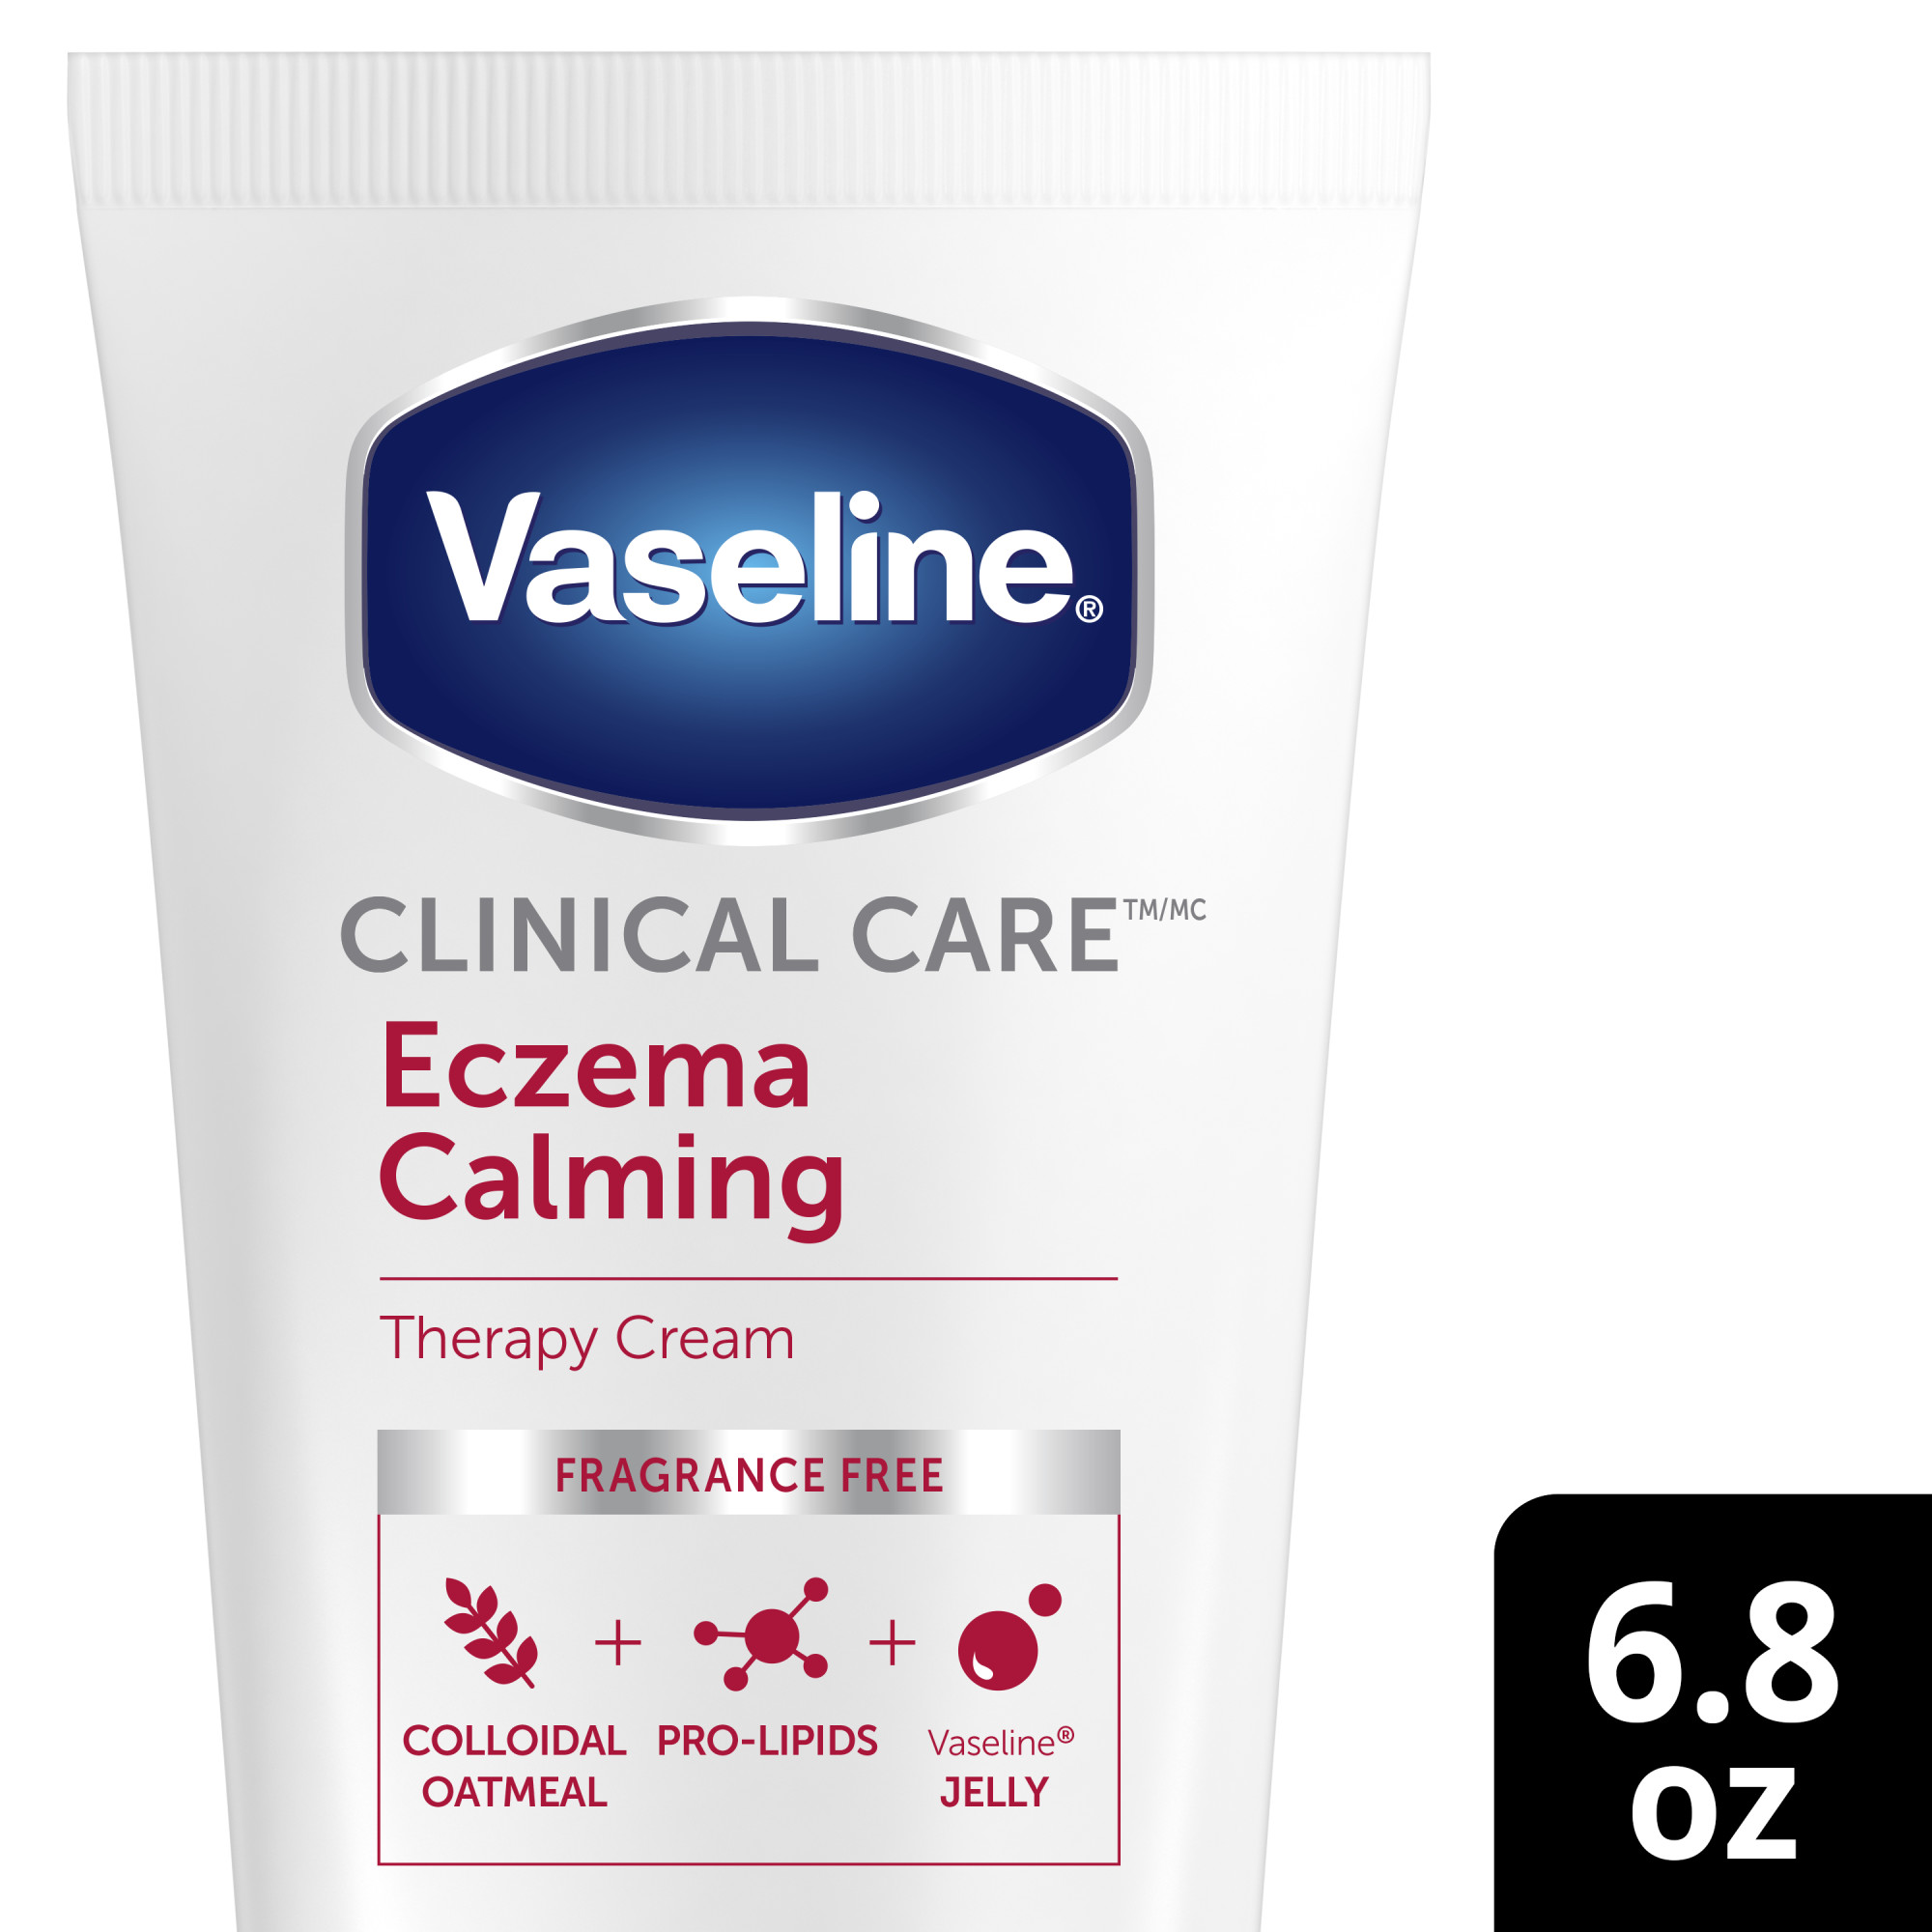 Vaseline Clinical Care Eczema Calming Body Cream, 6.8 oz - image 1 of 16